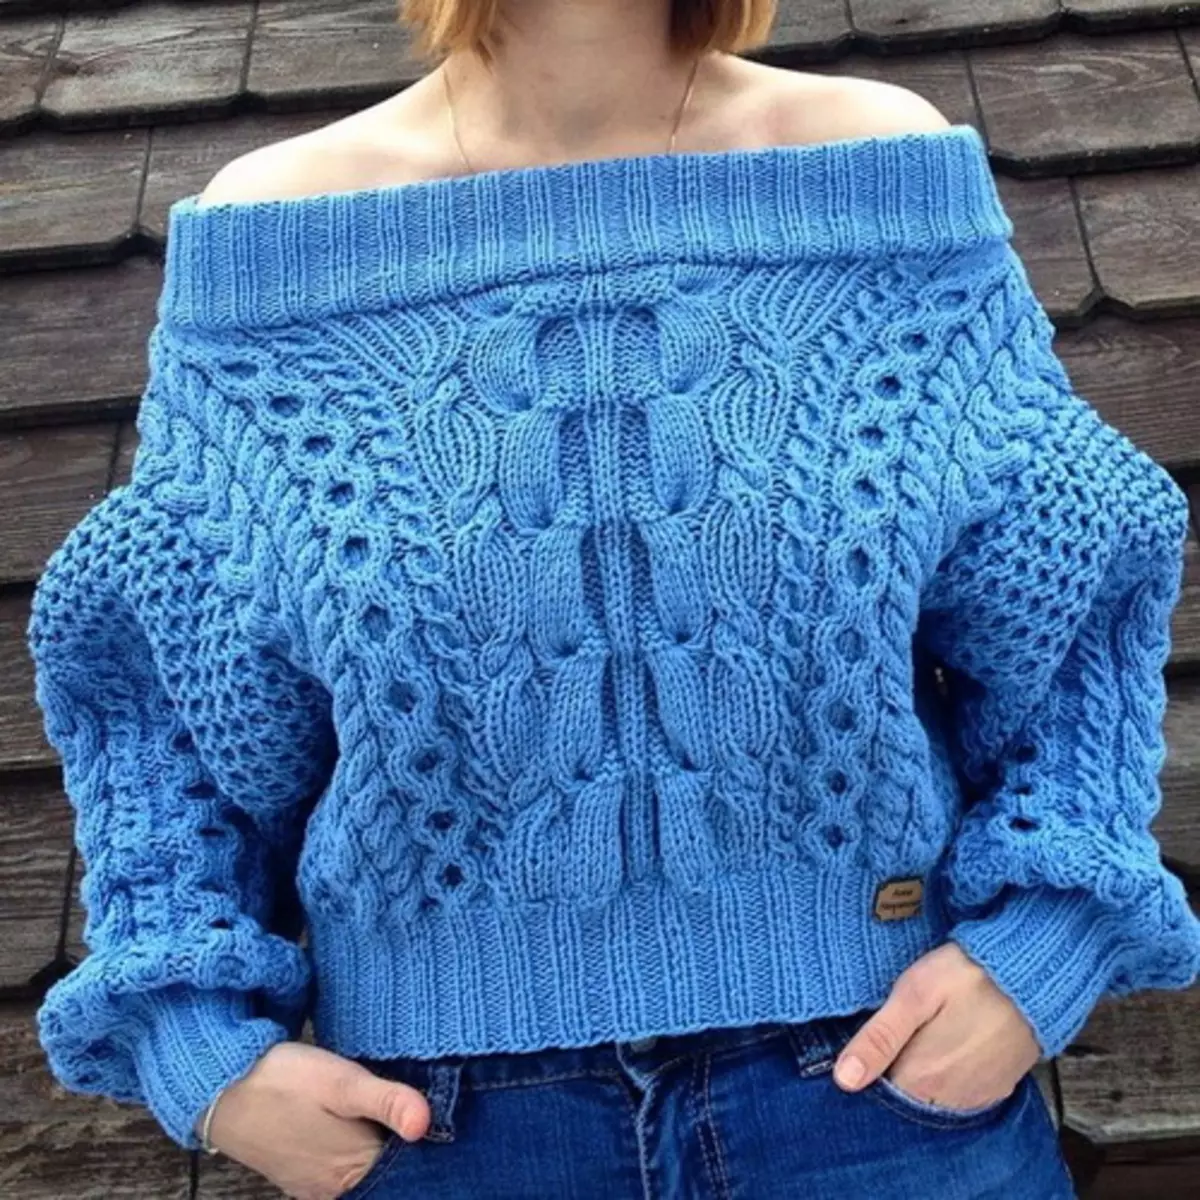 Ruban džemper: shema pletenja s master klase opis